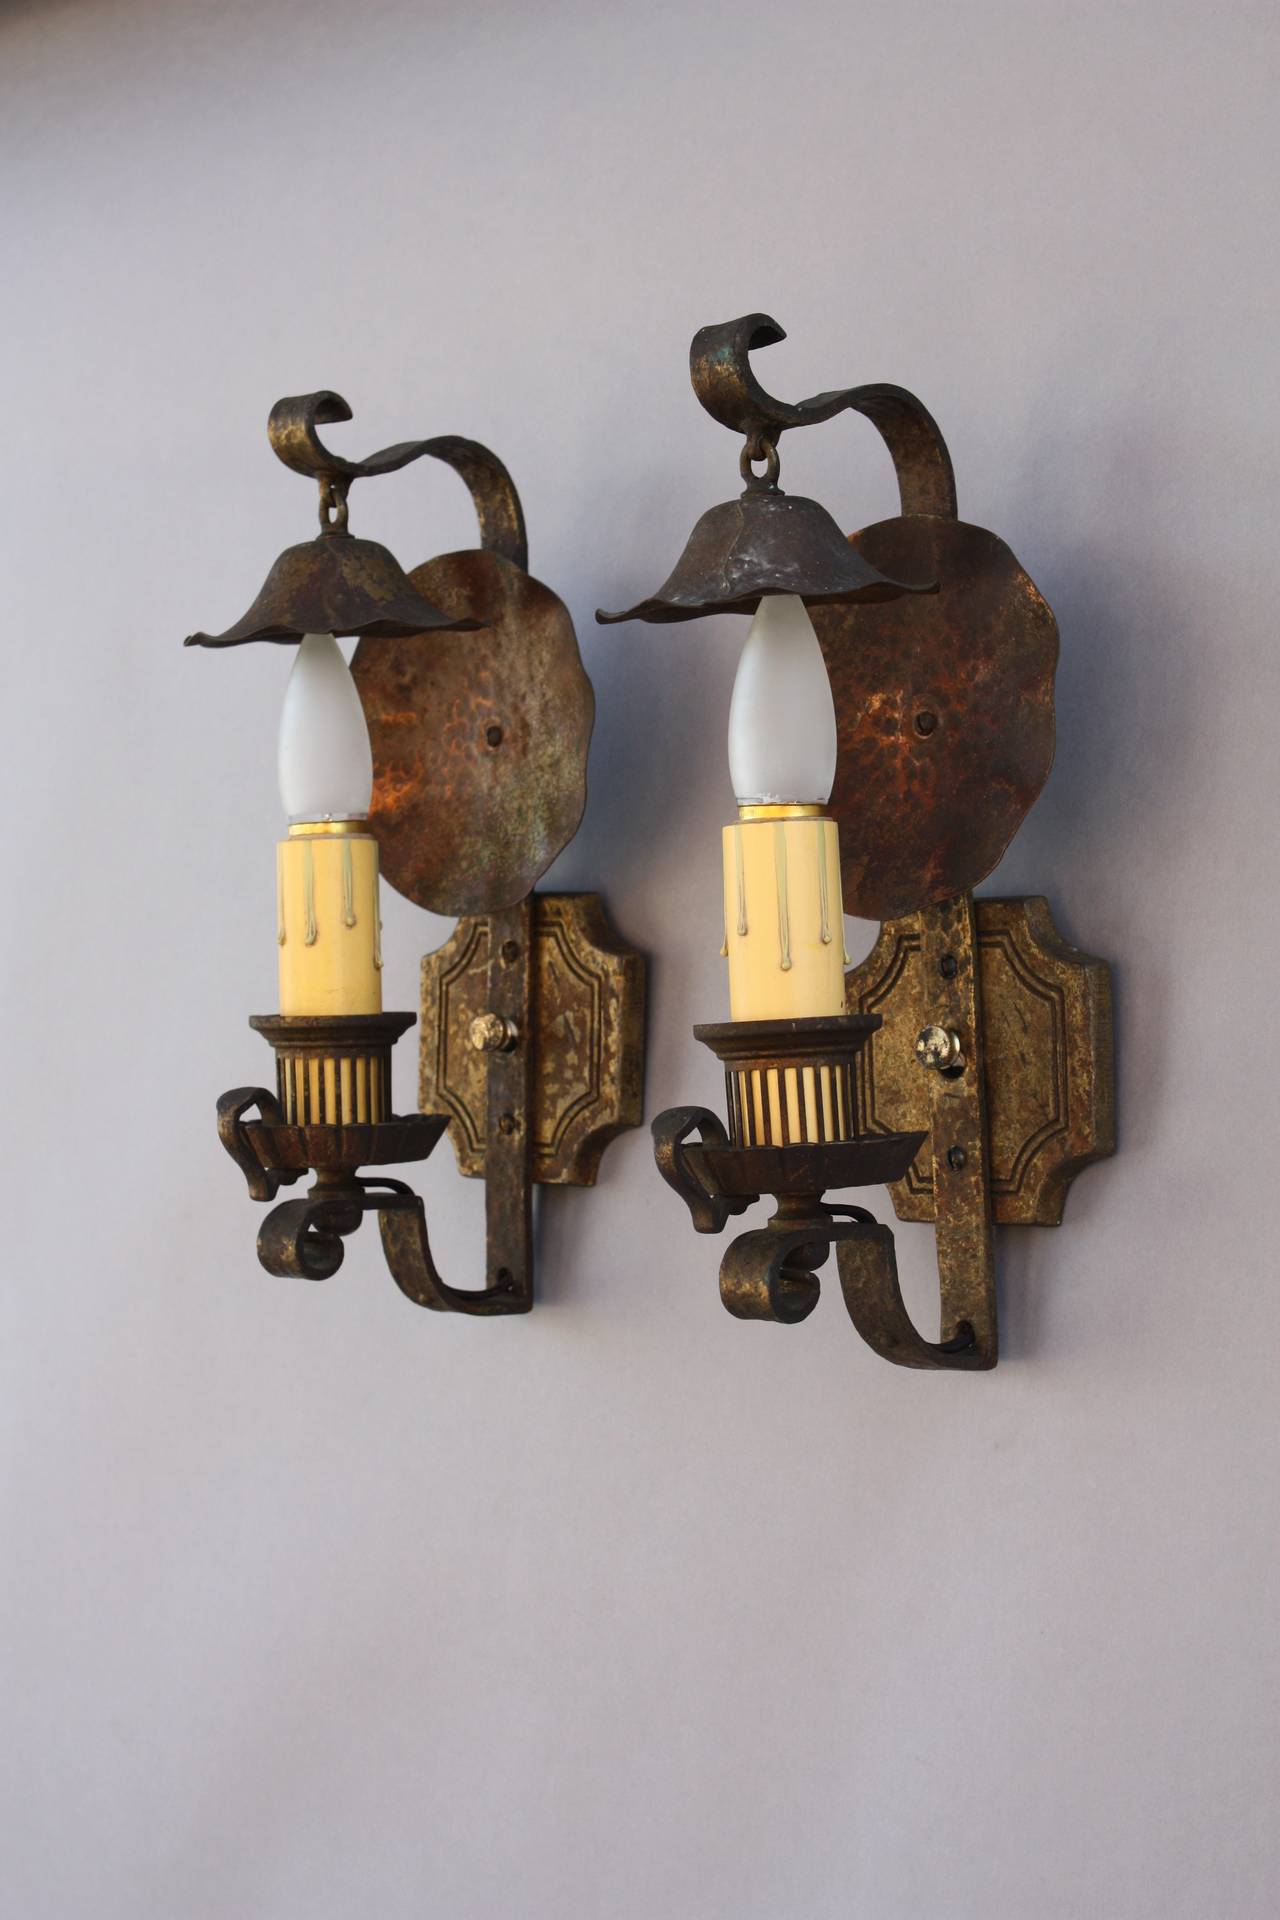 Circa 1920s pair of single light sconces. Good Original Condition.